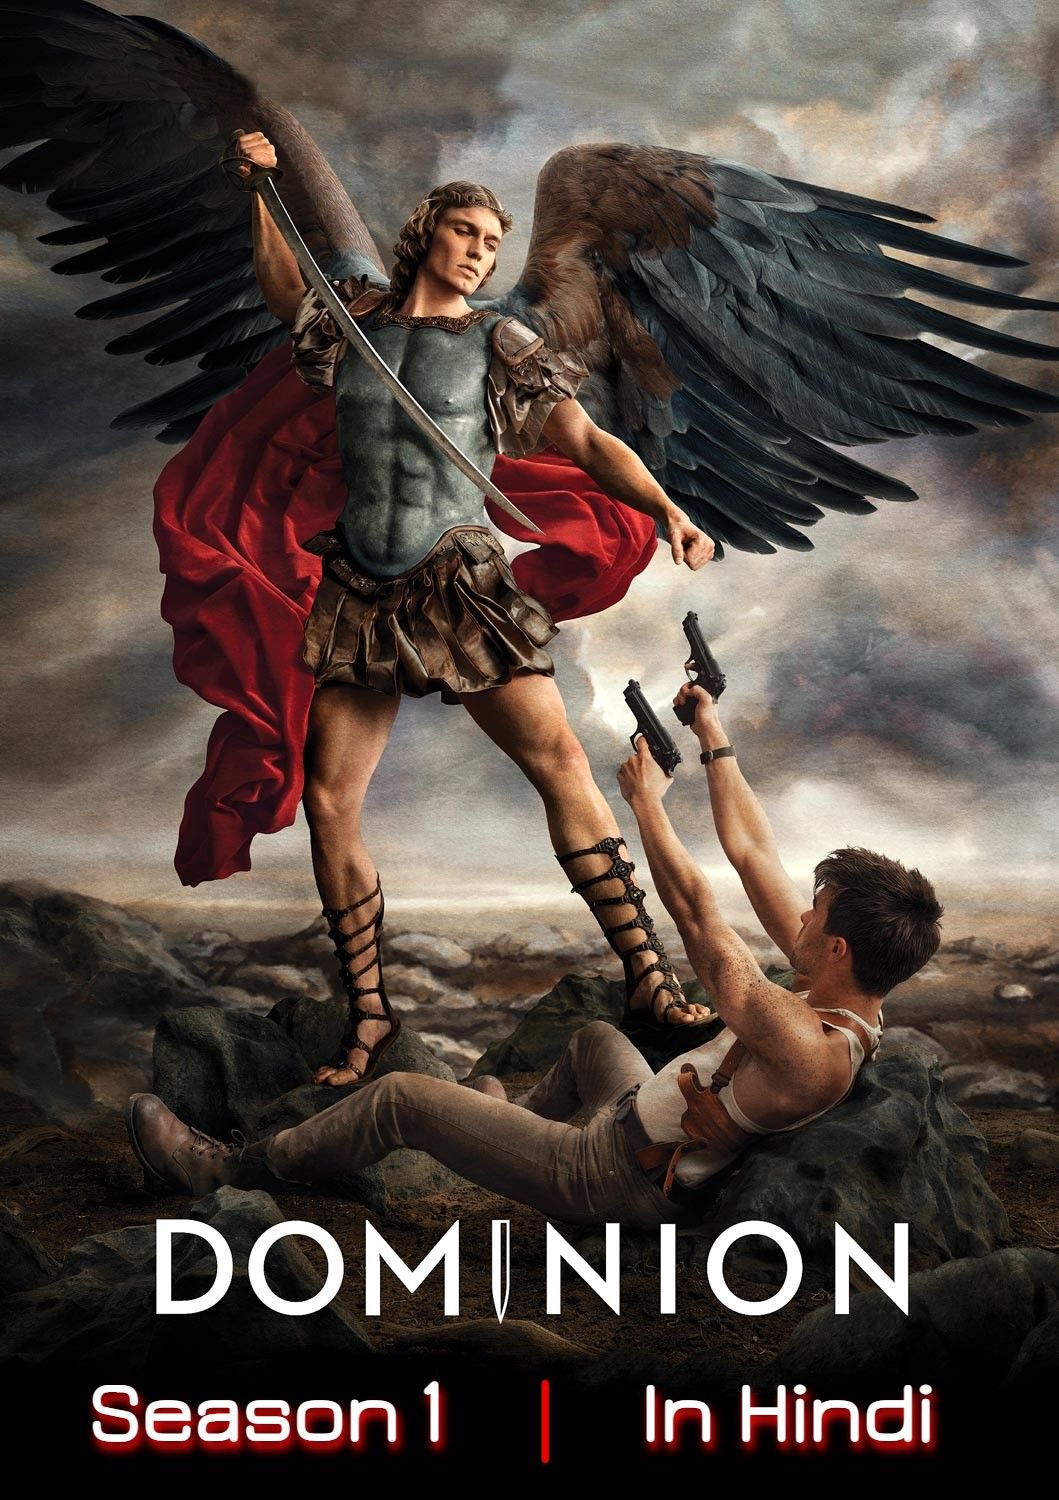 Dominion (Season 1) Hindi Dubbed Complete Series download full movie